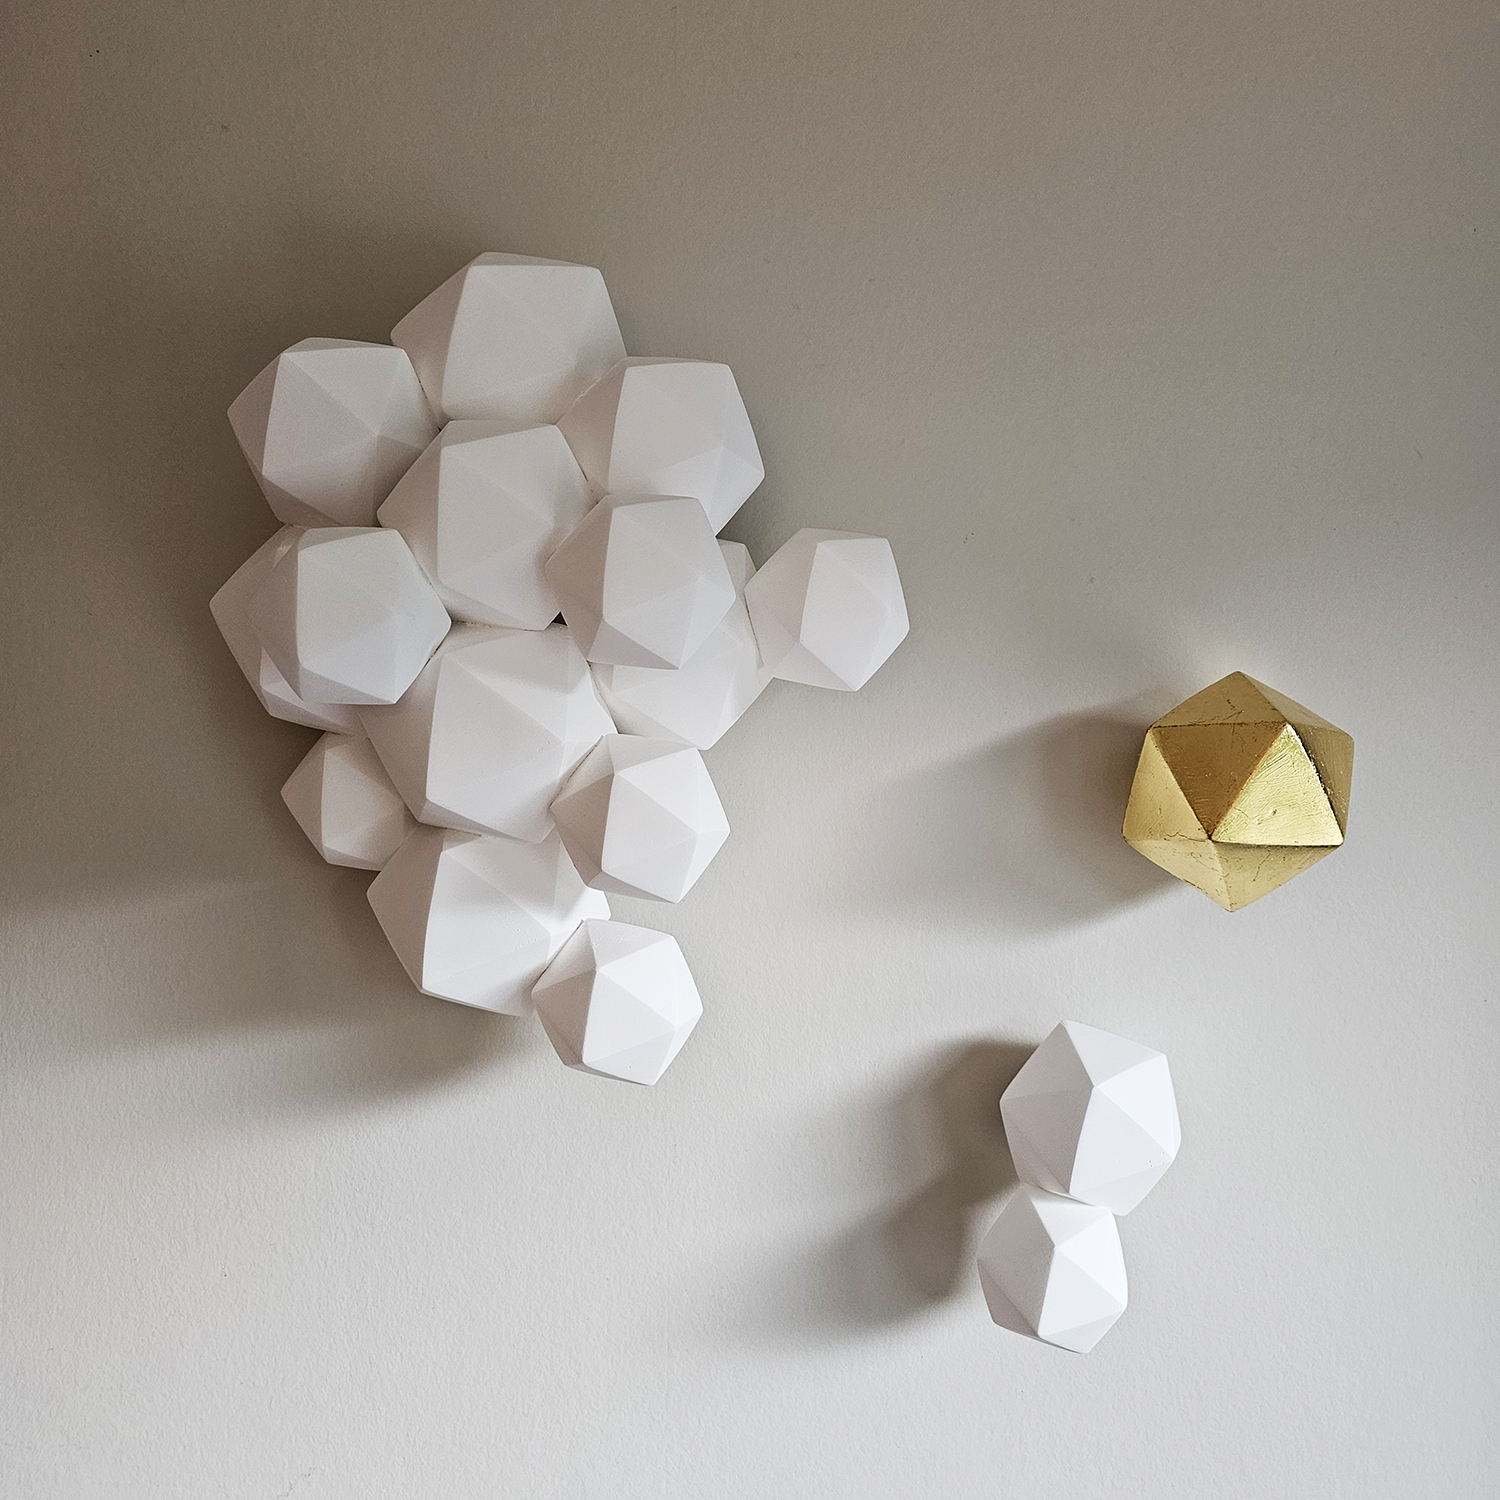 Kunst: Icosahedrons van kunstenaar Mo Cornelisse